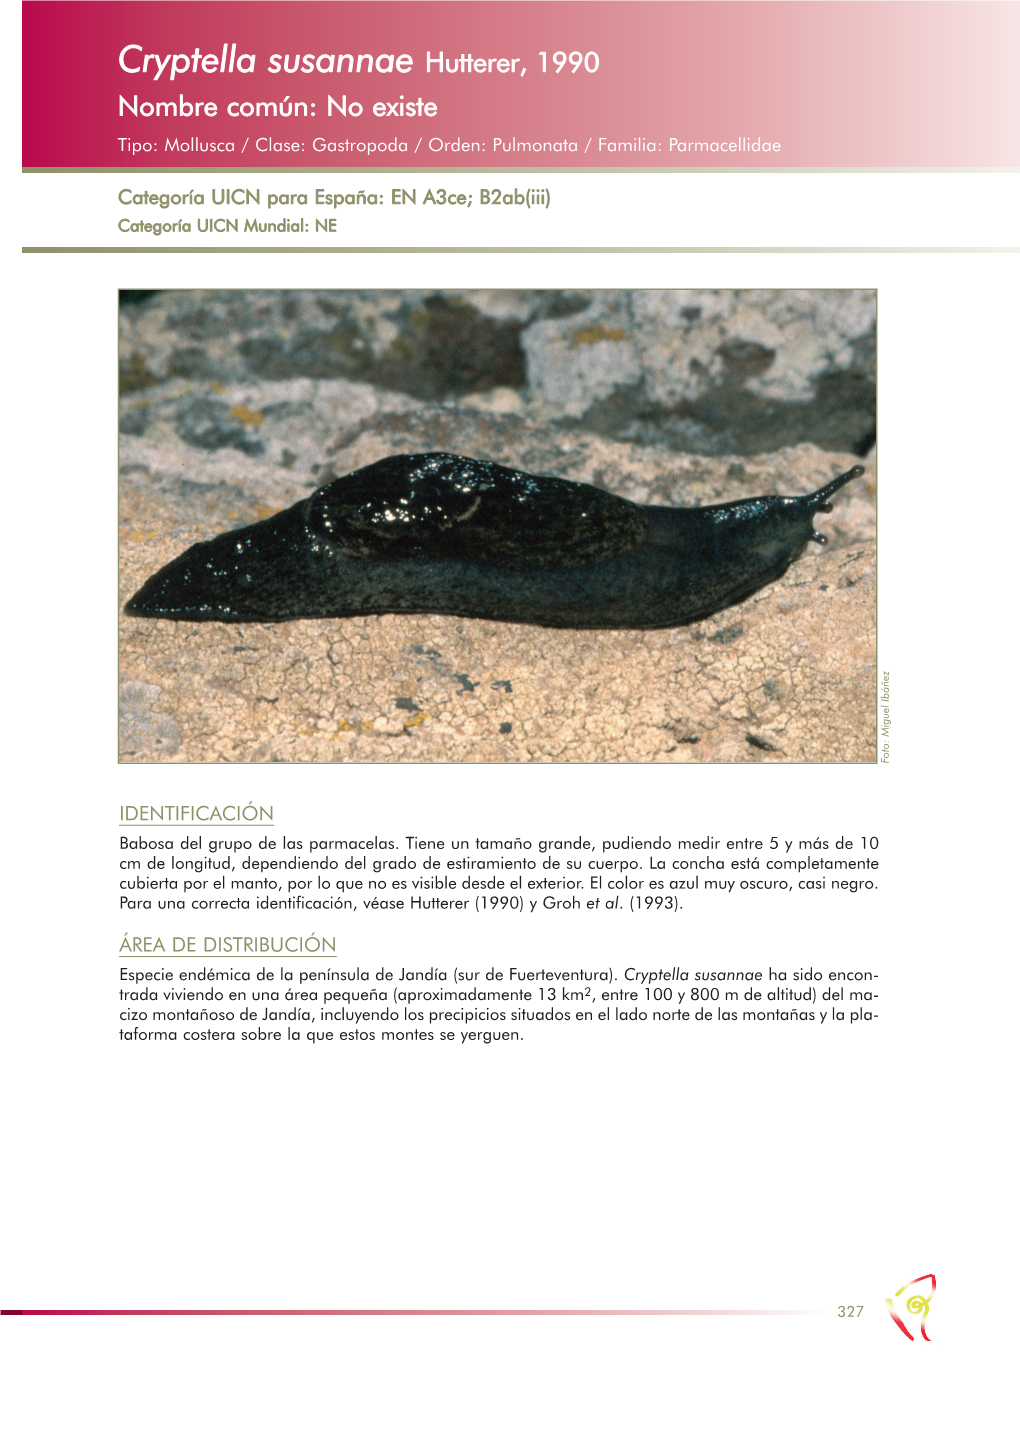 Cryptella Susannae Hutterer, 1990 Nombre Común: No Existe Tipo: Mollusca / Clase: Gastropoda / Orden: Pulmonata / Familia: Parmacellidae